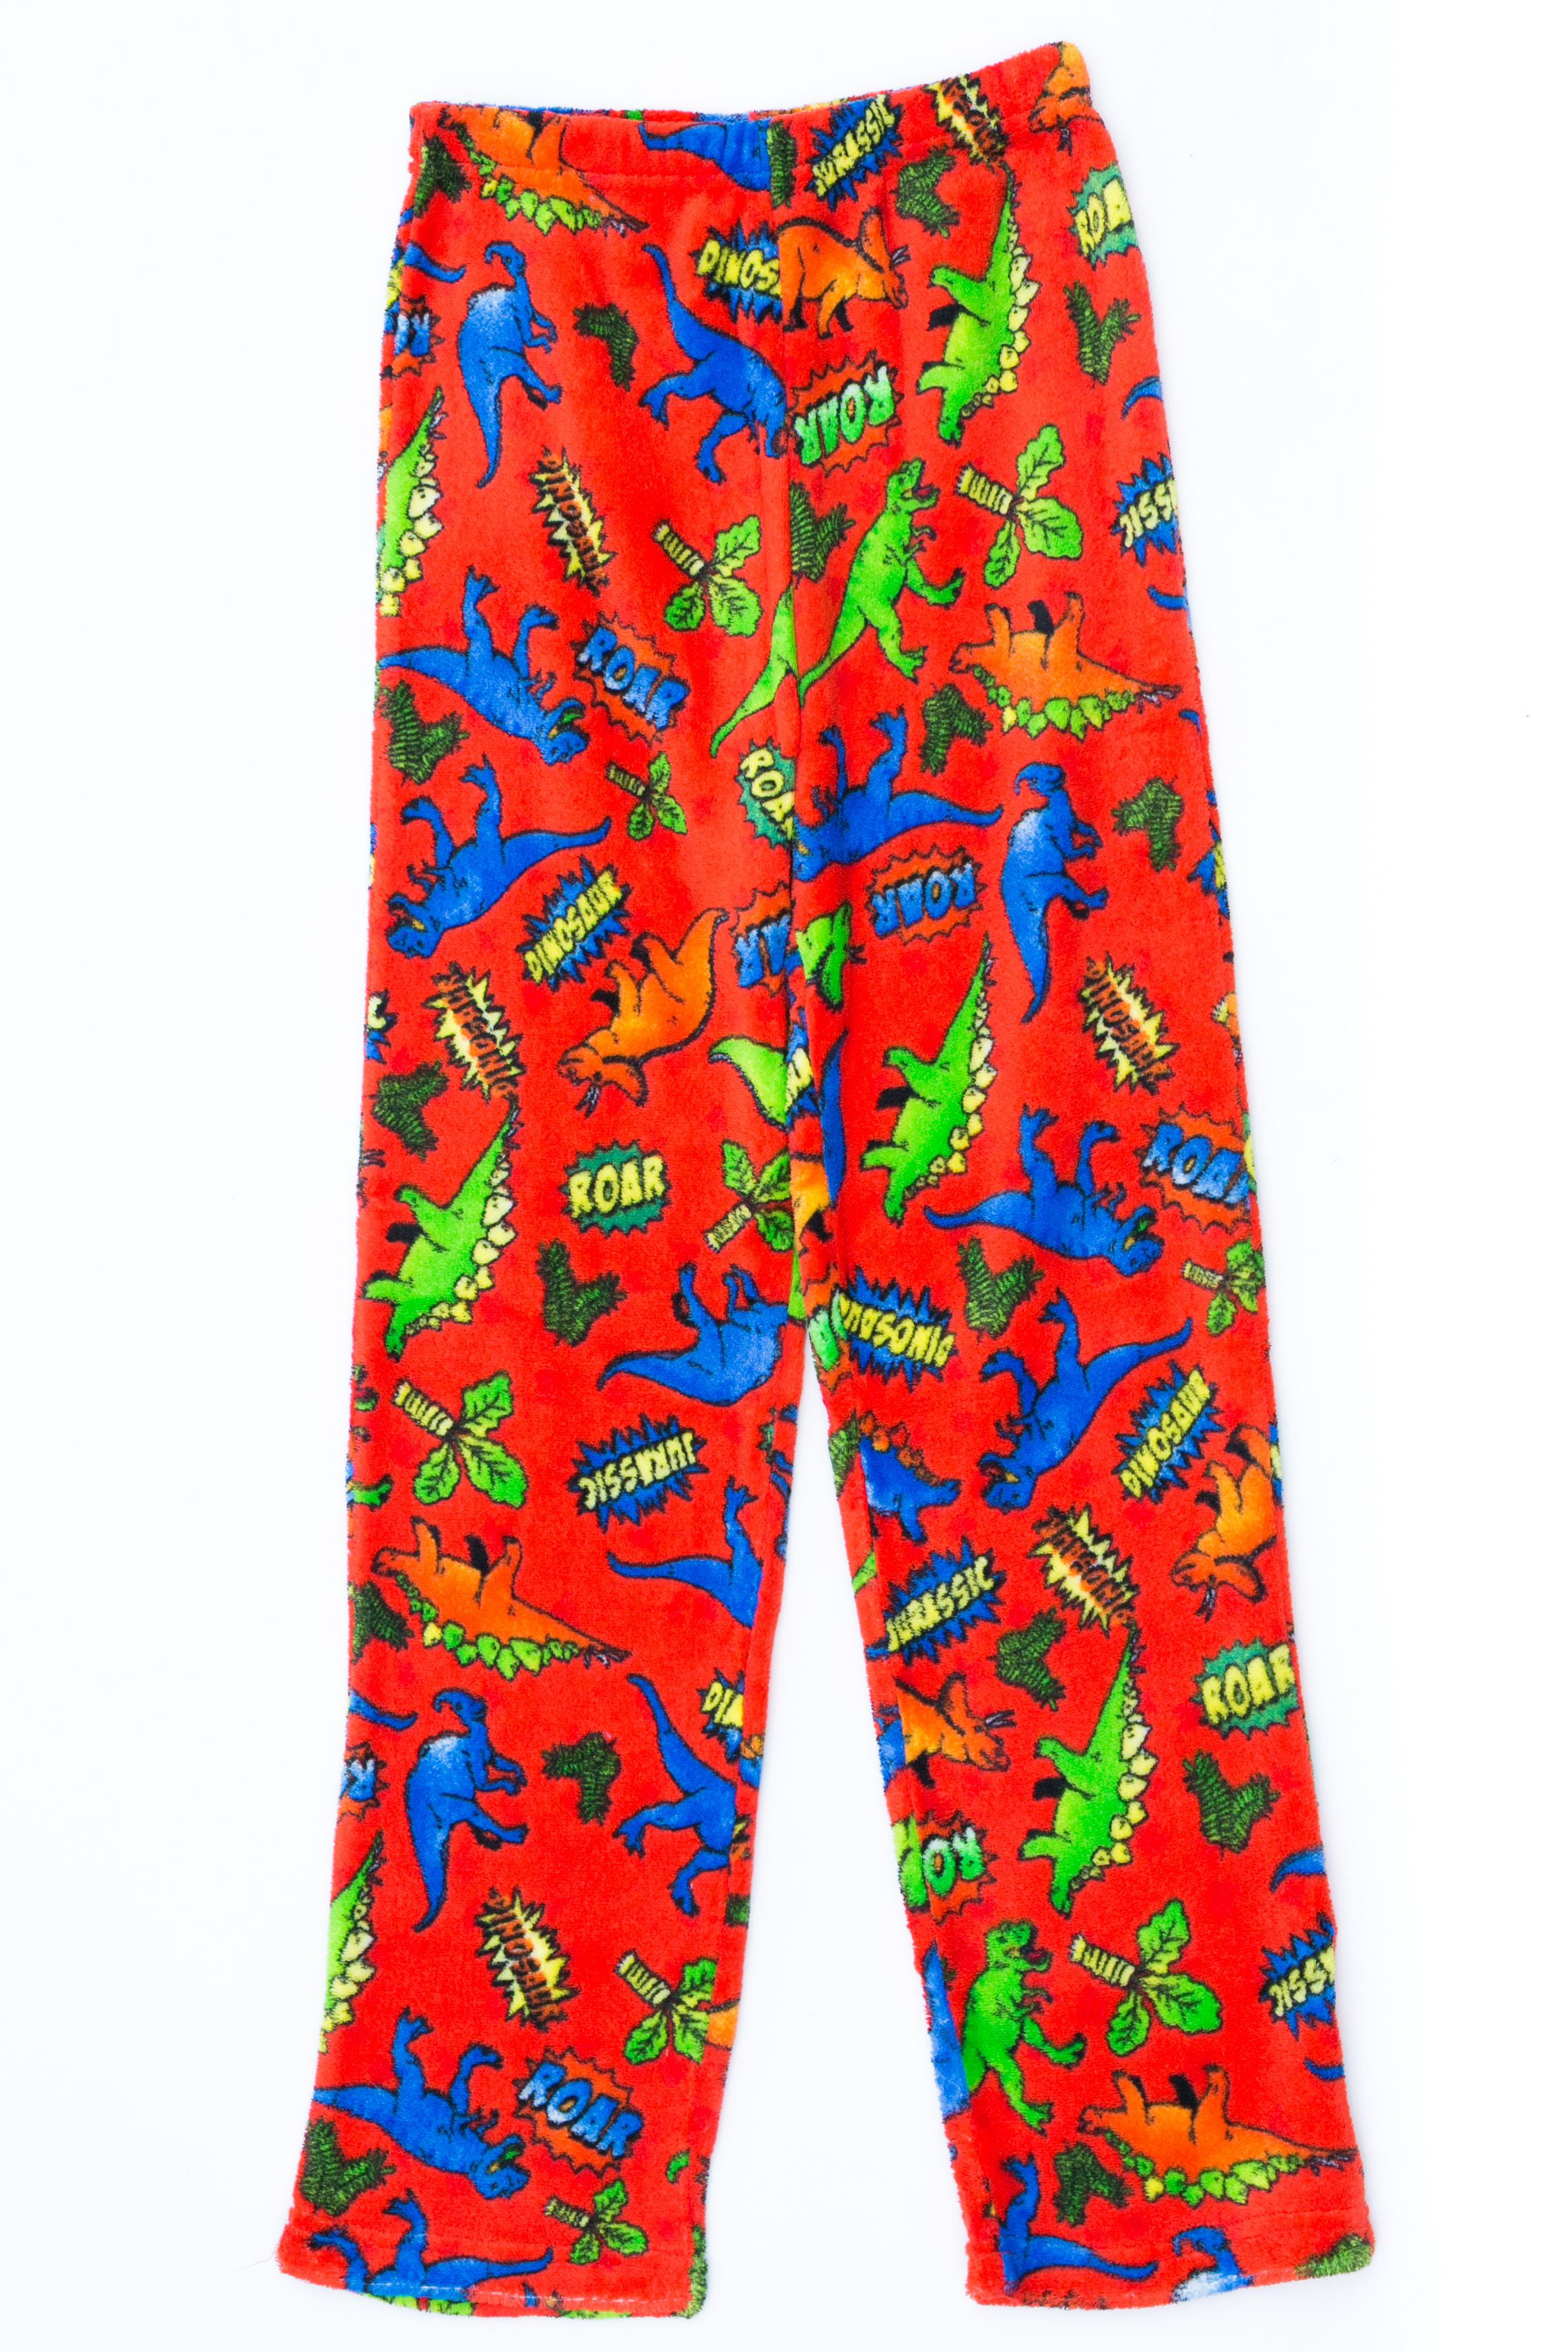 $32 Boys Climatesmart Green Dinosaur Fleece Winter Lounge Pants Pajamas-sz 16/18 